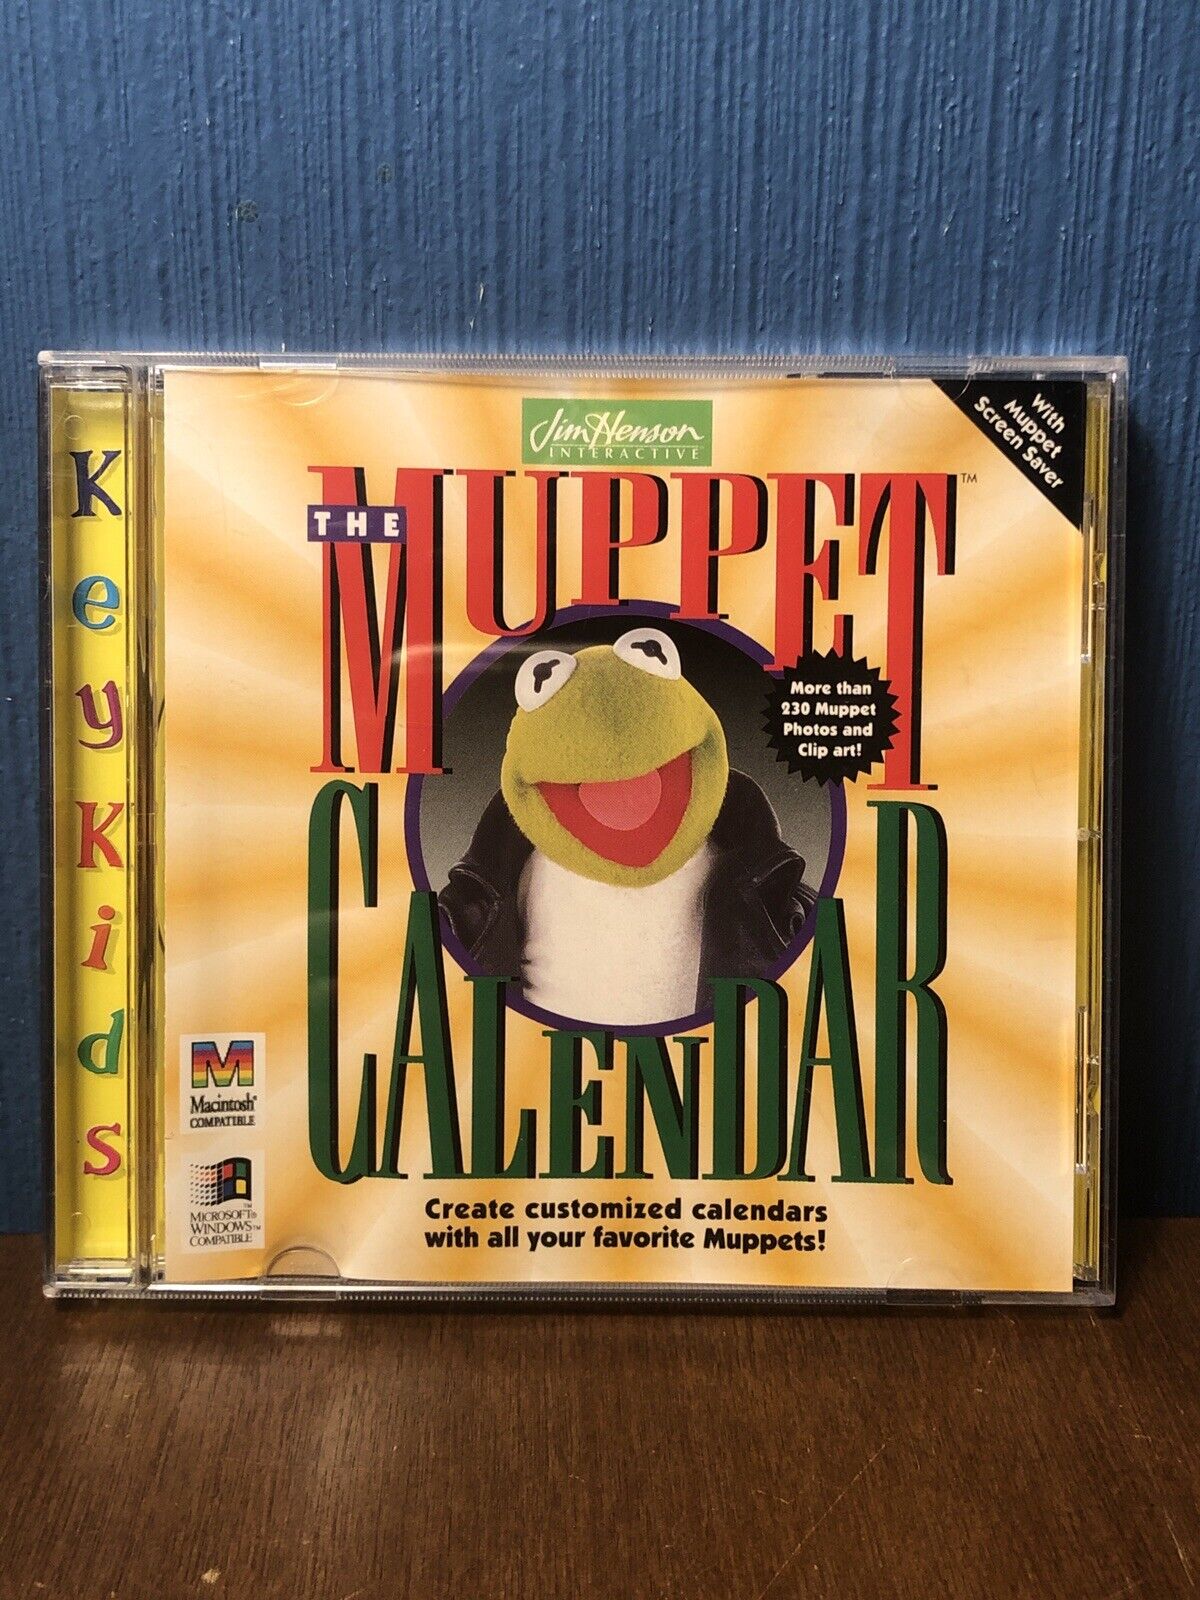 VINTAGE Muppets PC Cd Rom - Jim Henson Interactive CALENDAR - 90s Clip Art Pics